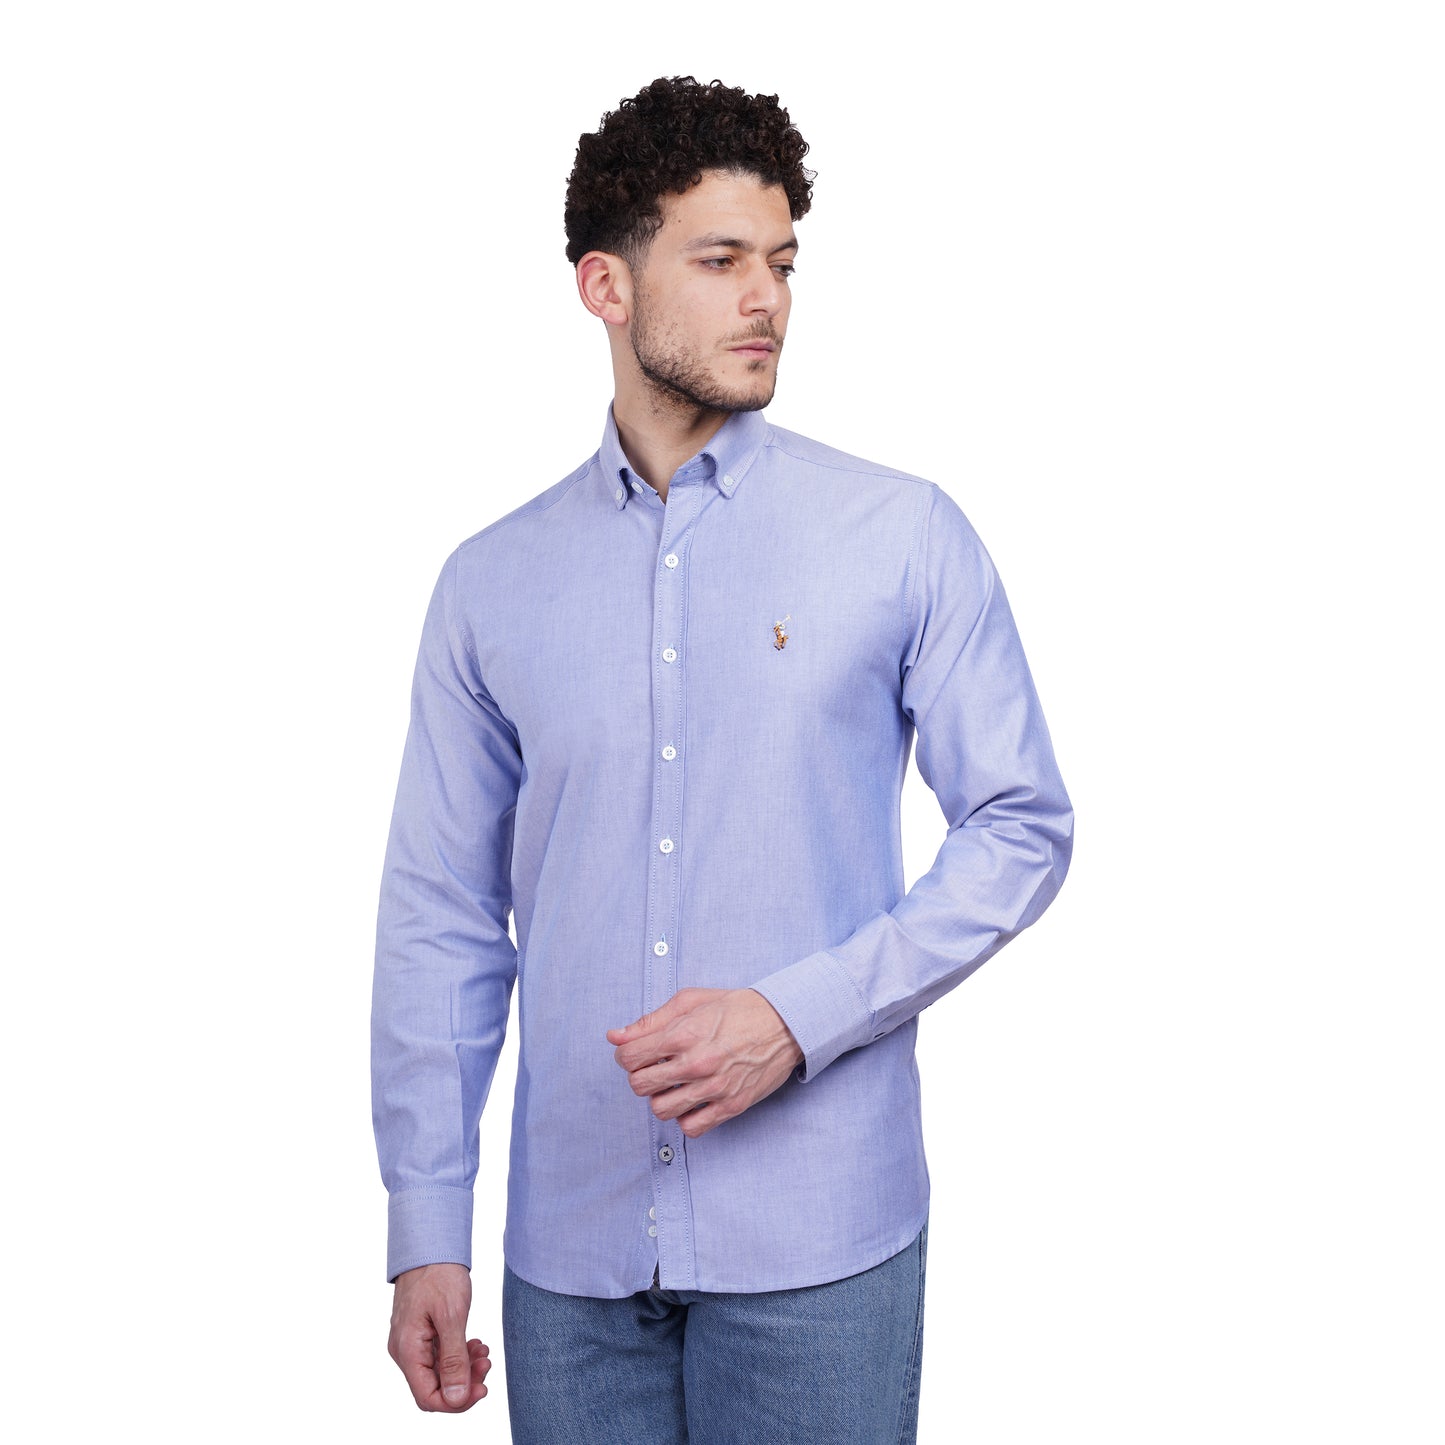 RL Polo Plain Long Sleeve Oxford Men Shirt